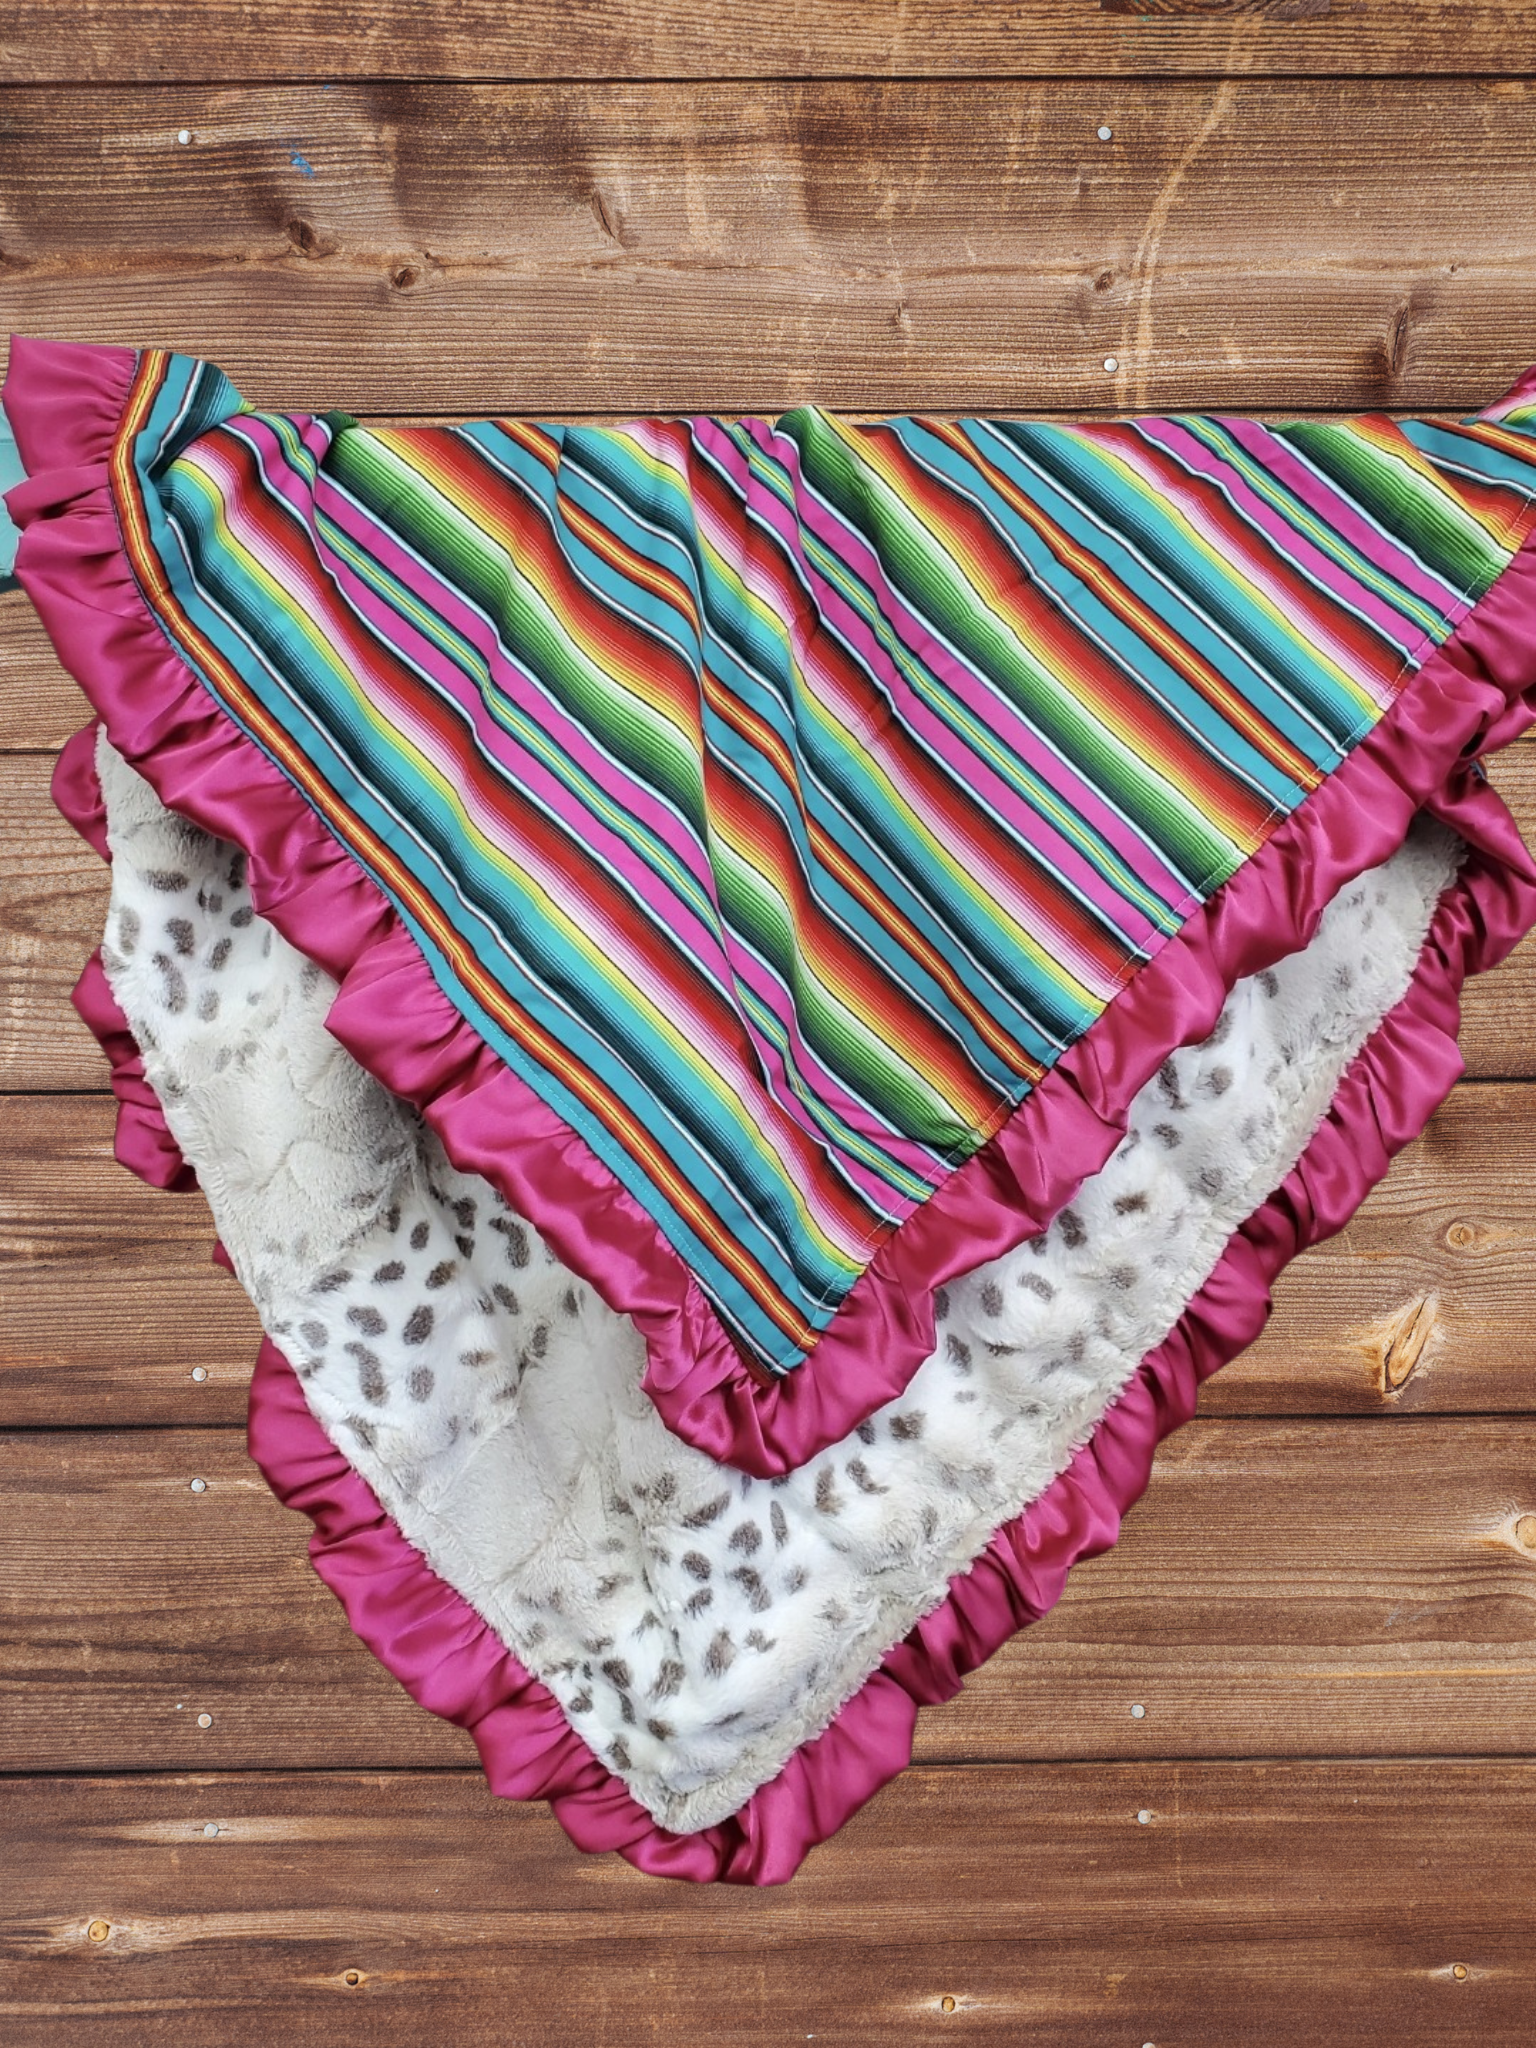 Ruffle Baby Blanket - Serape and Lynx Minky Blanket - DBC Baby Bedding Co 